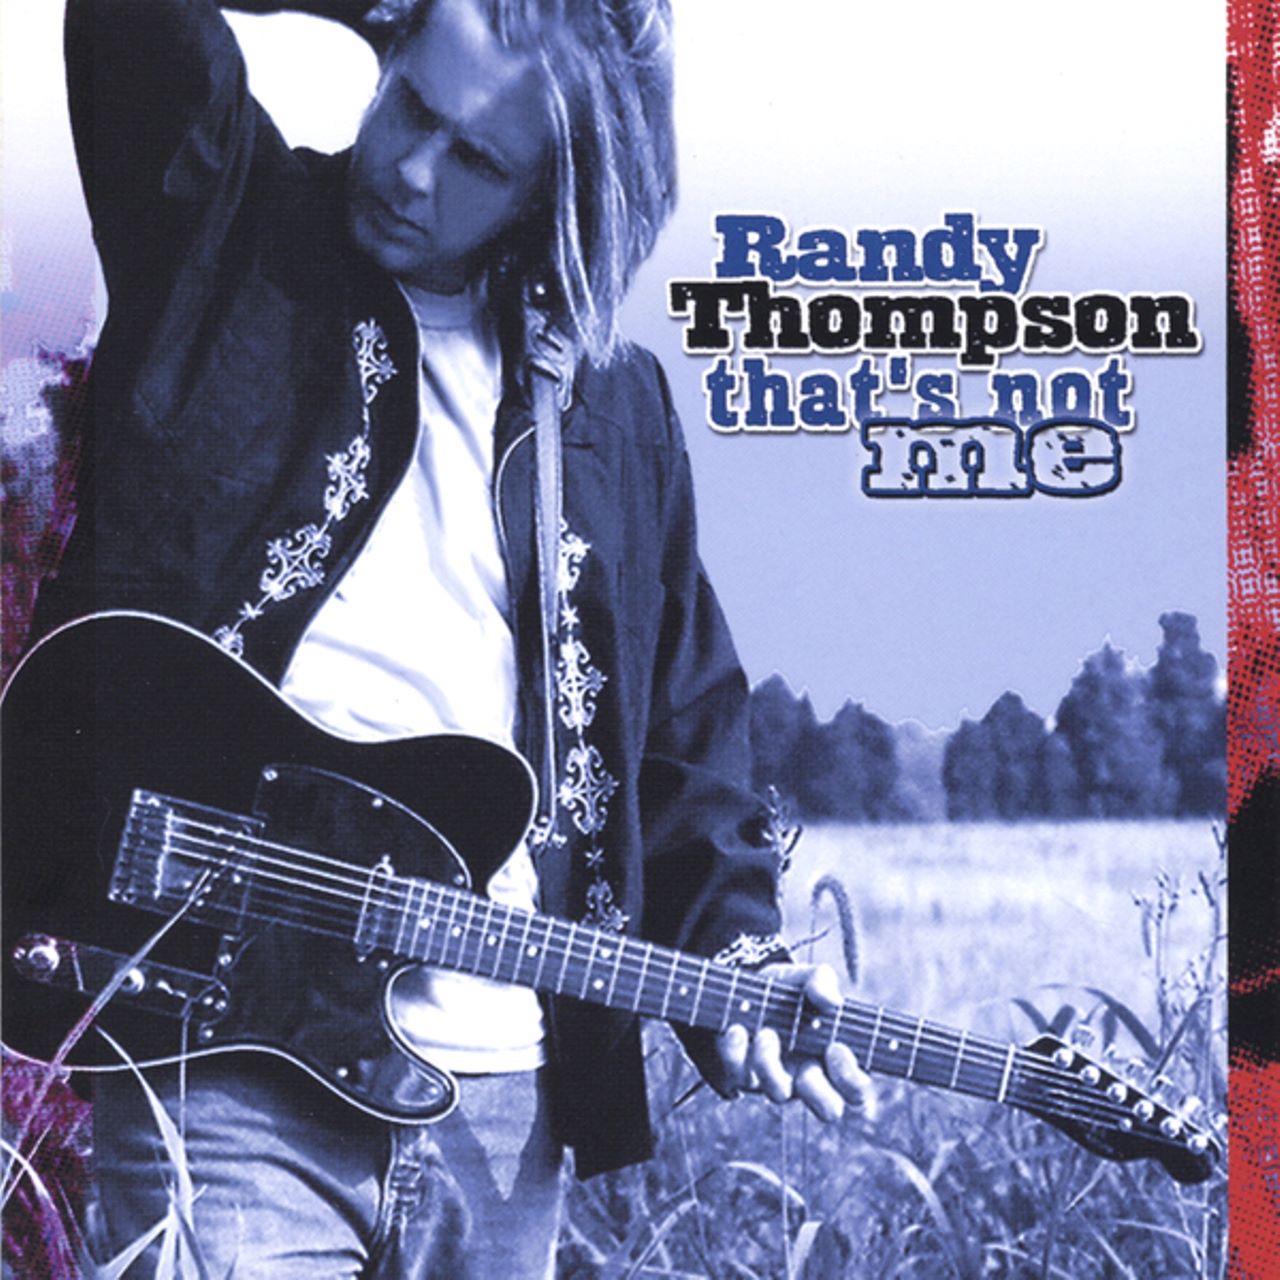 Randy Thompson - That's Not Me cover album